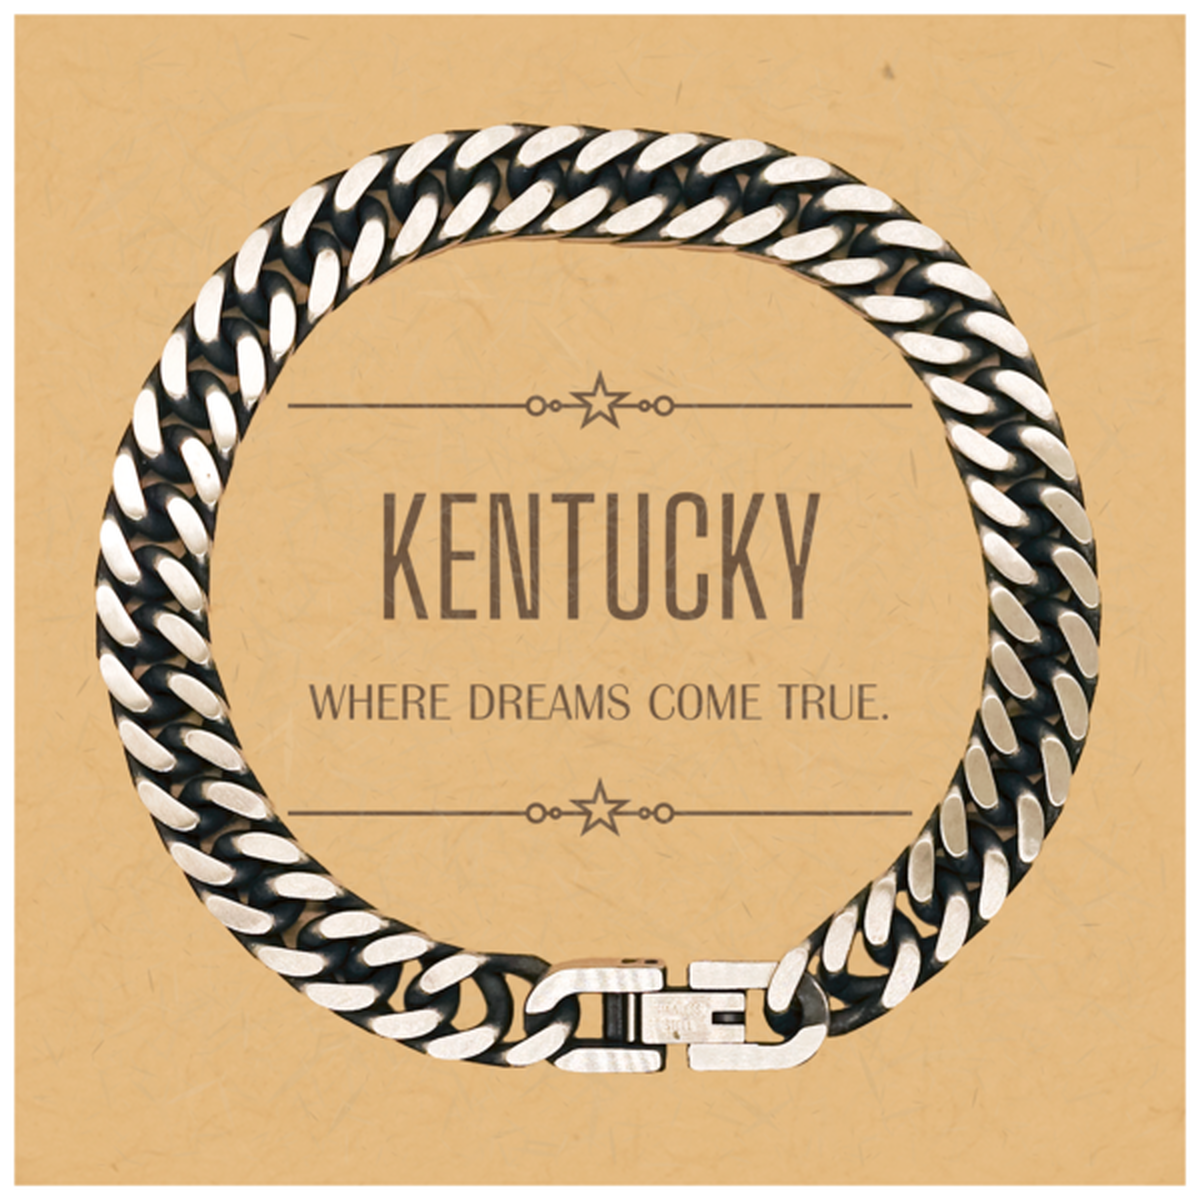 Love Kentucky State Cuban Link Chain Bracelet, Kentucky Where dreams come true, Birthday Christmas Inspirational Gifts For Kentucky Men, Women, Friends